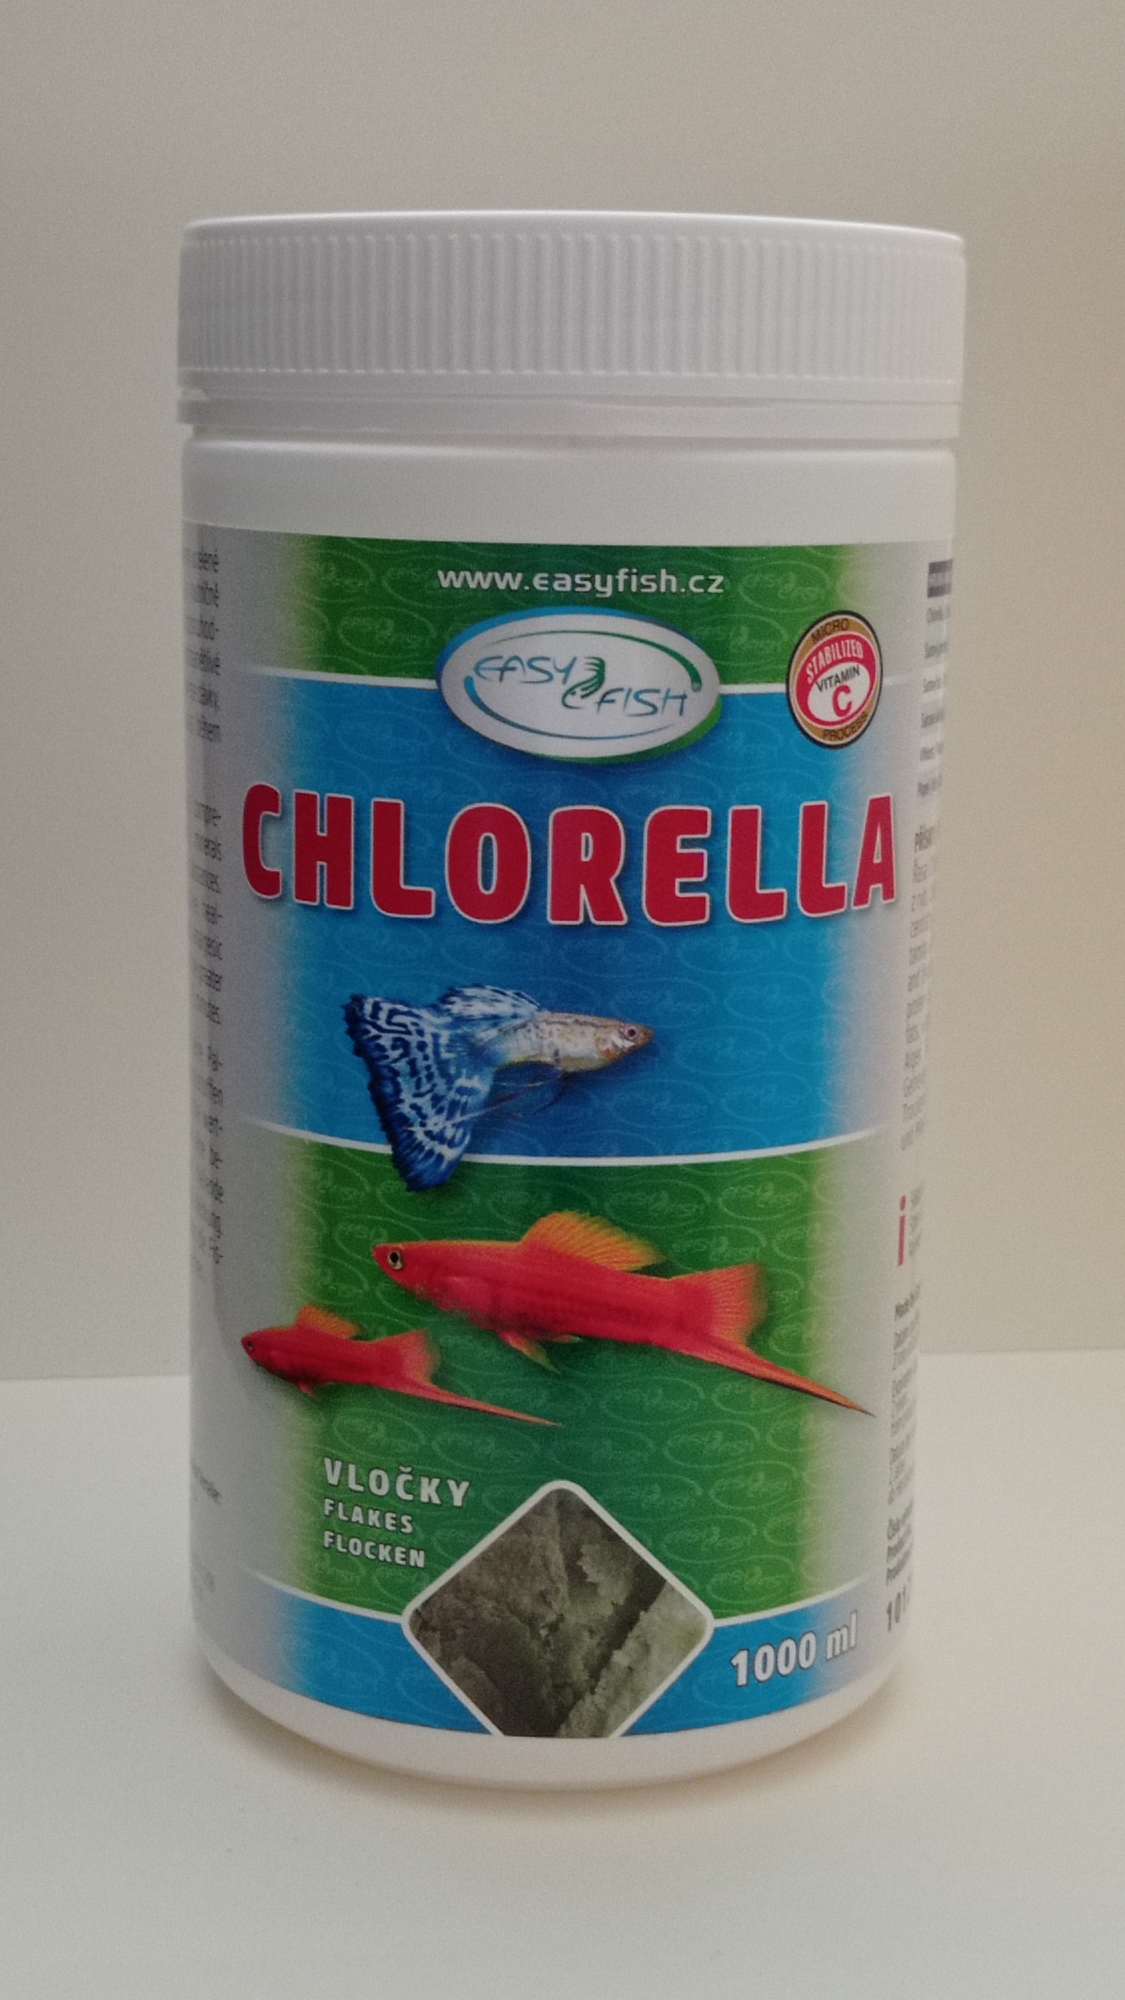 EasyFish Chlorella vločky 1000 ml